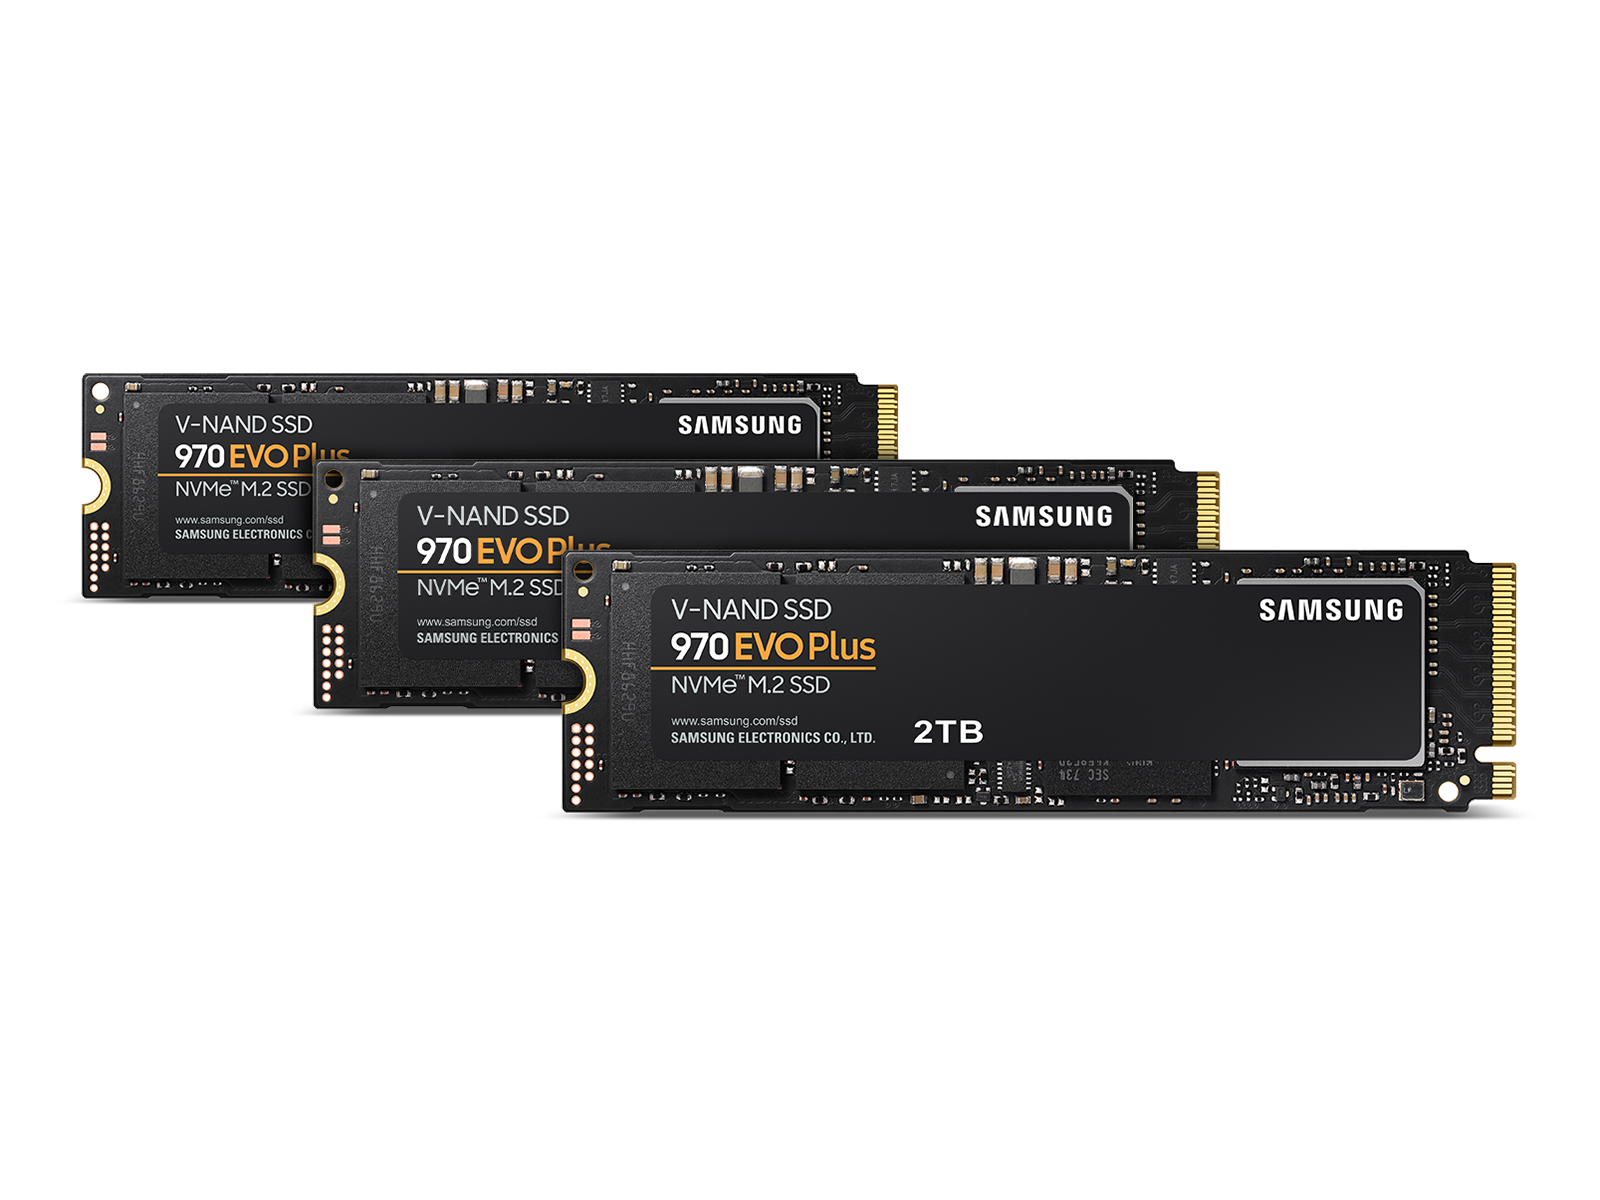 Is Samsung 970 EVO Plus 250GB, 500GB, 1TB or 2TB a better value?